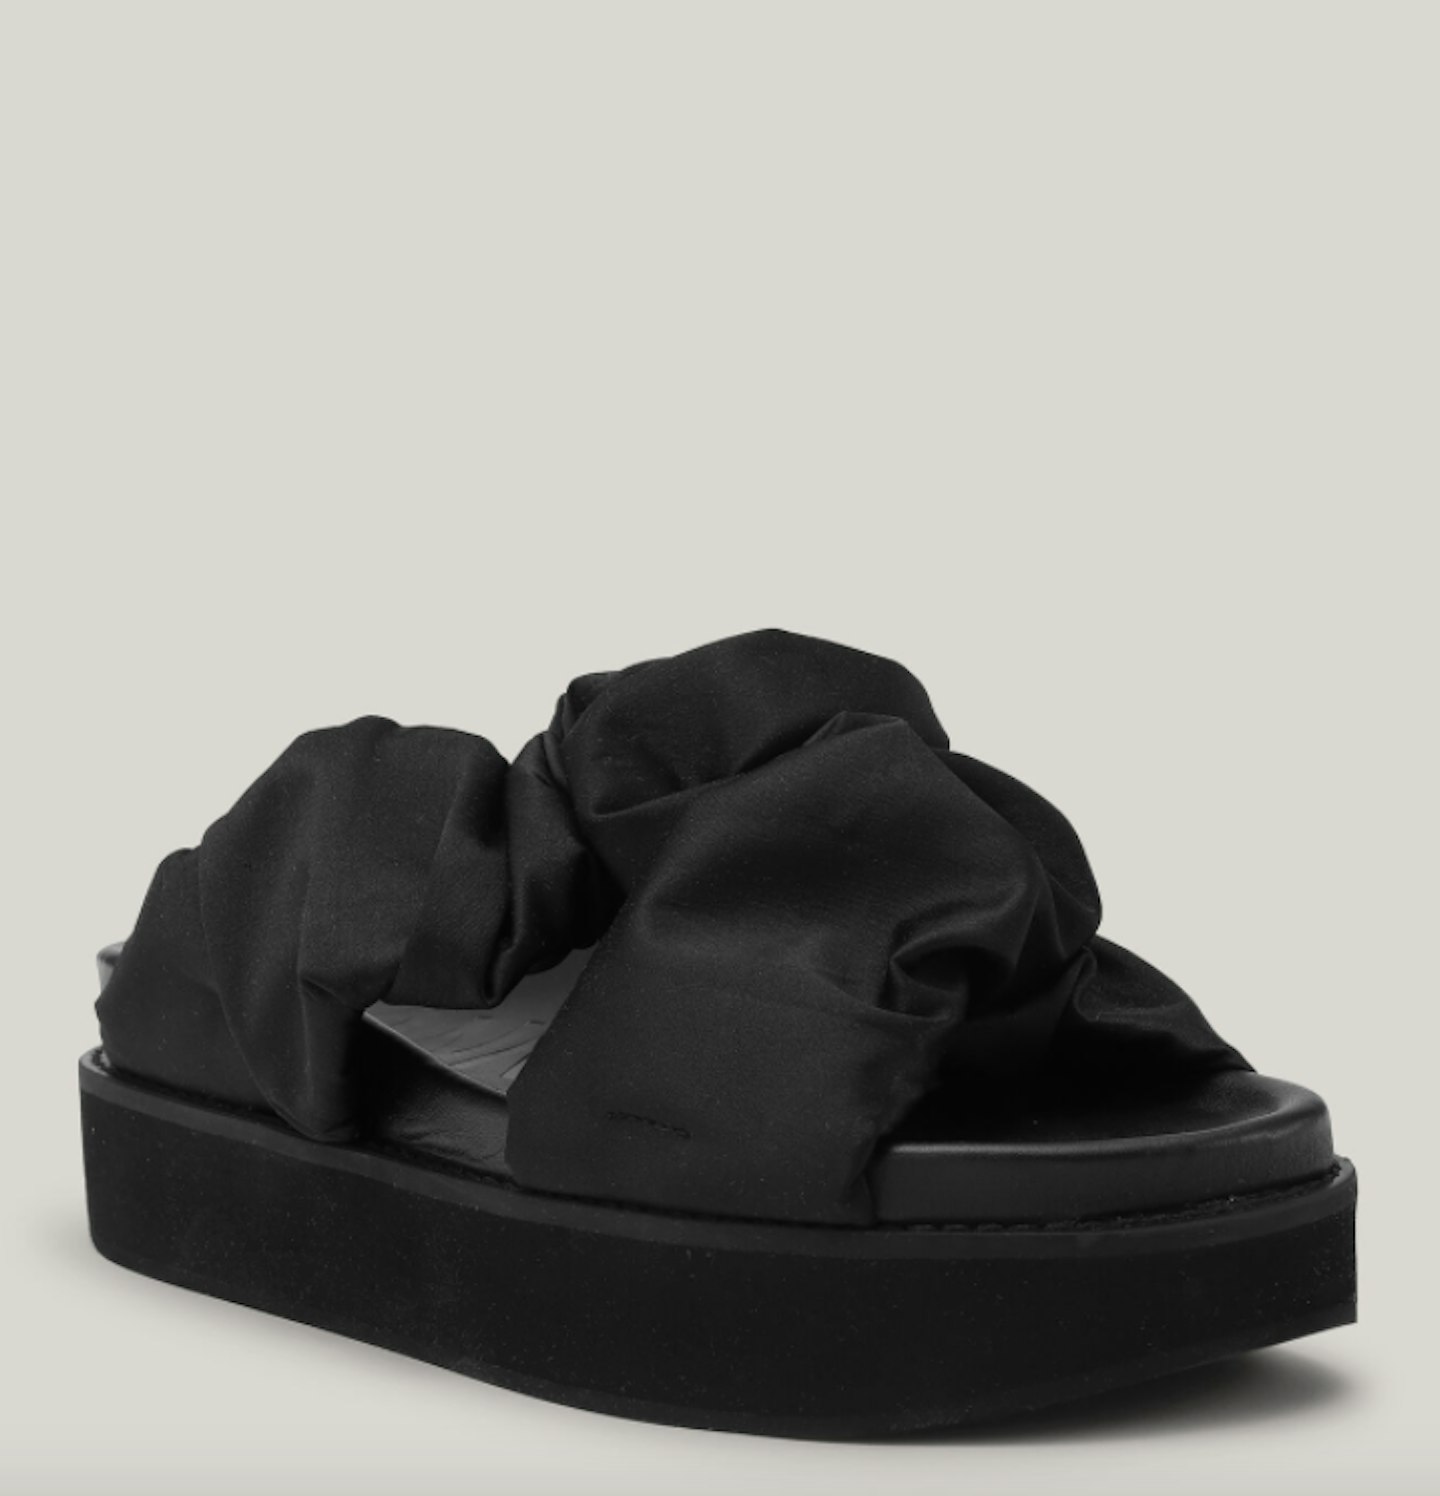 Ganni, Low Flatform Ruched Sandals, £295